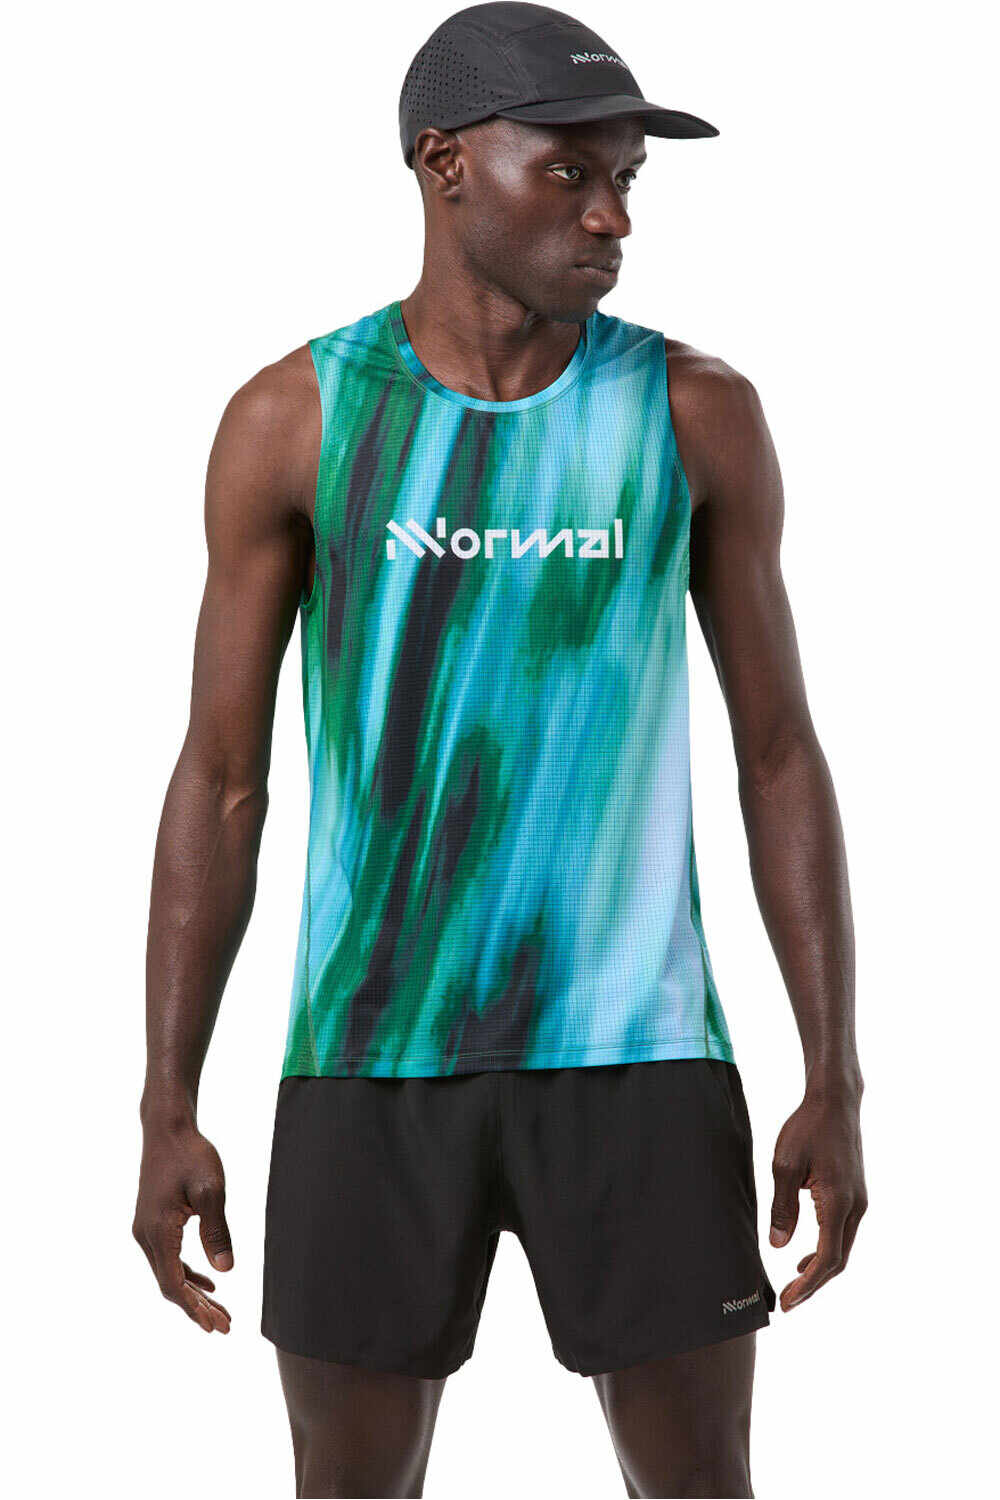 Nnormal camisetas trail running tirantes hombre RACE TANK PRINT vista frontal